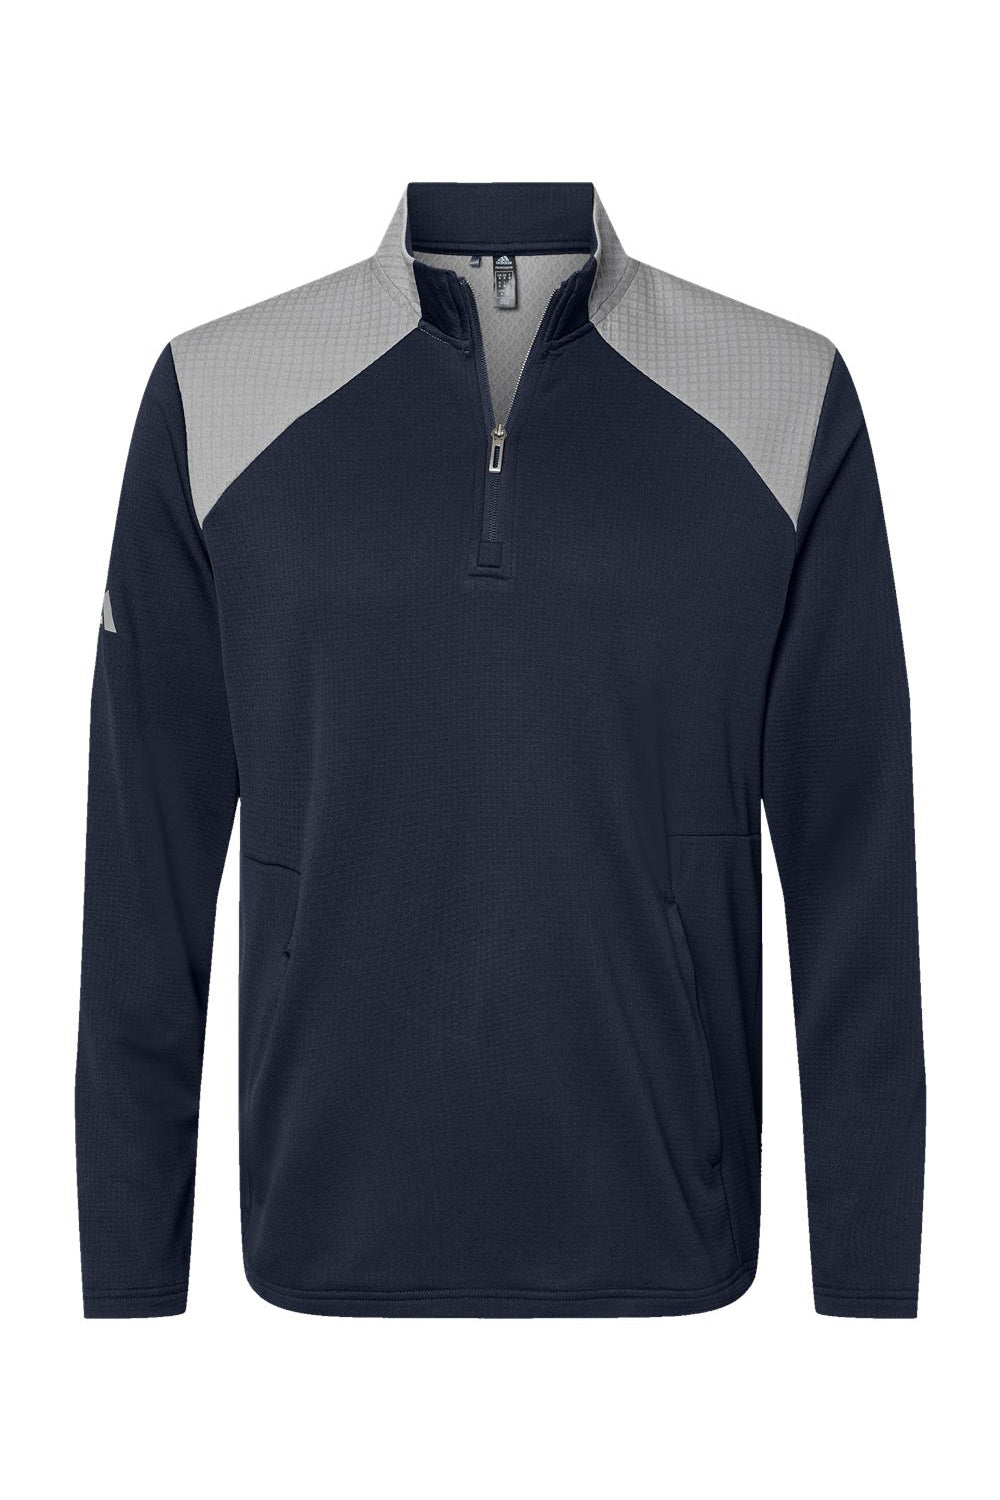 Adidas A532 Mens Textured Mixed Media 1/4 Zip Sweatshirt Collegiate Navy Blue/Grey Flat Front